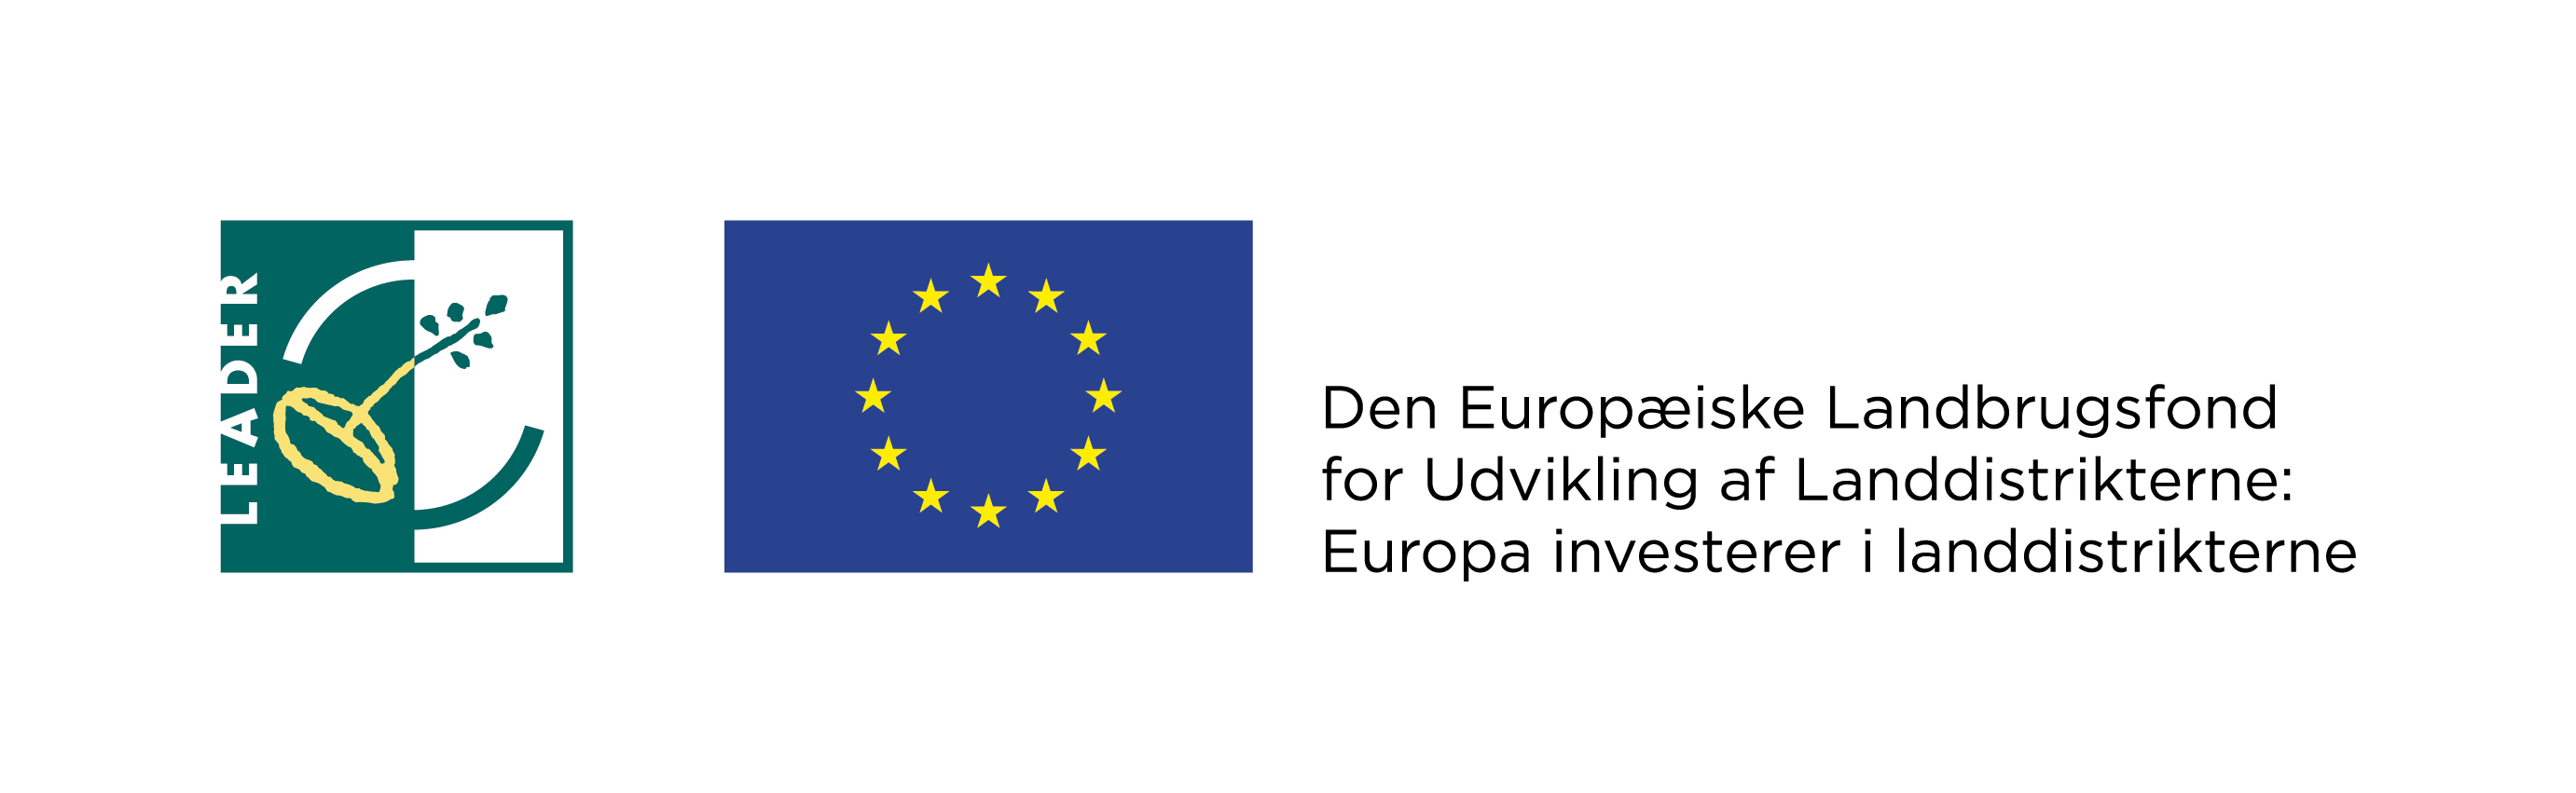 Den Europæiske Laddbrugfonds logo